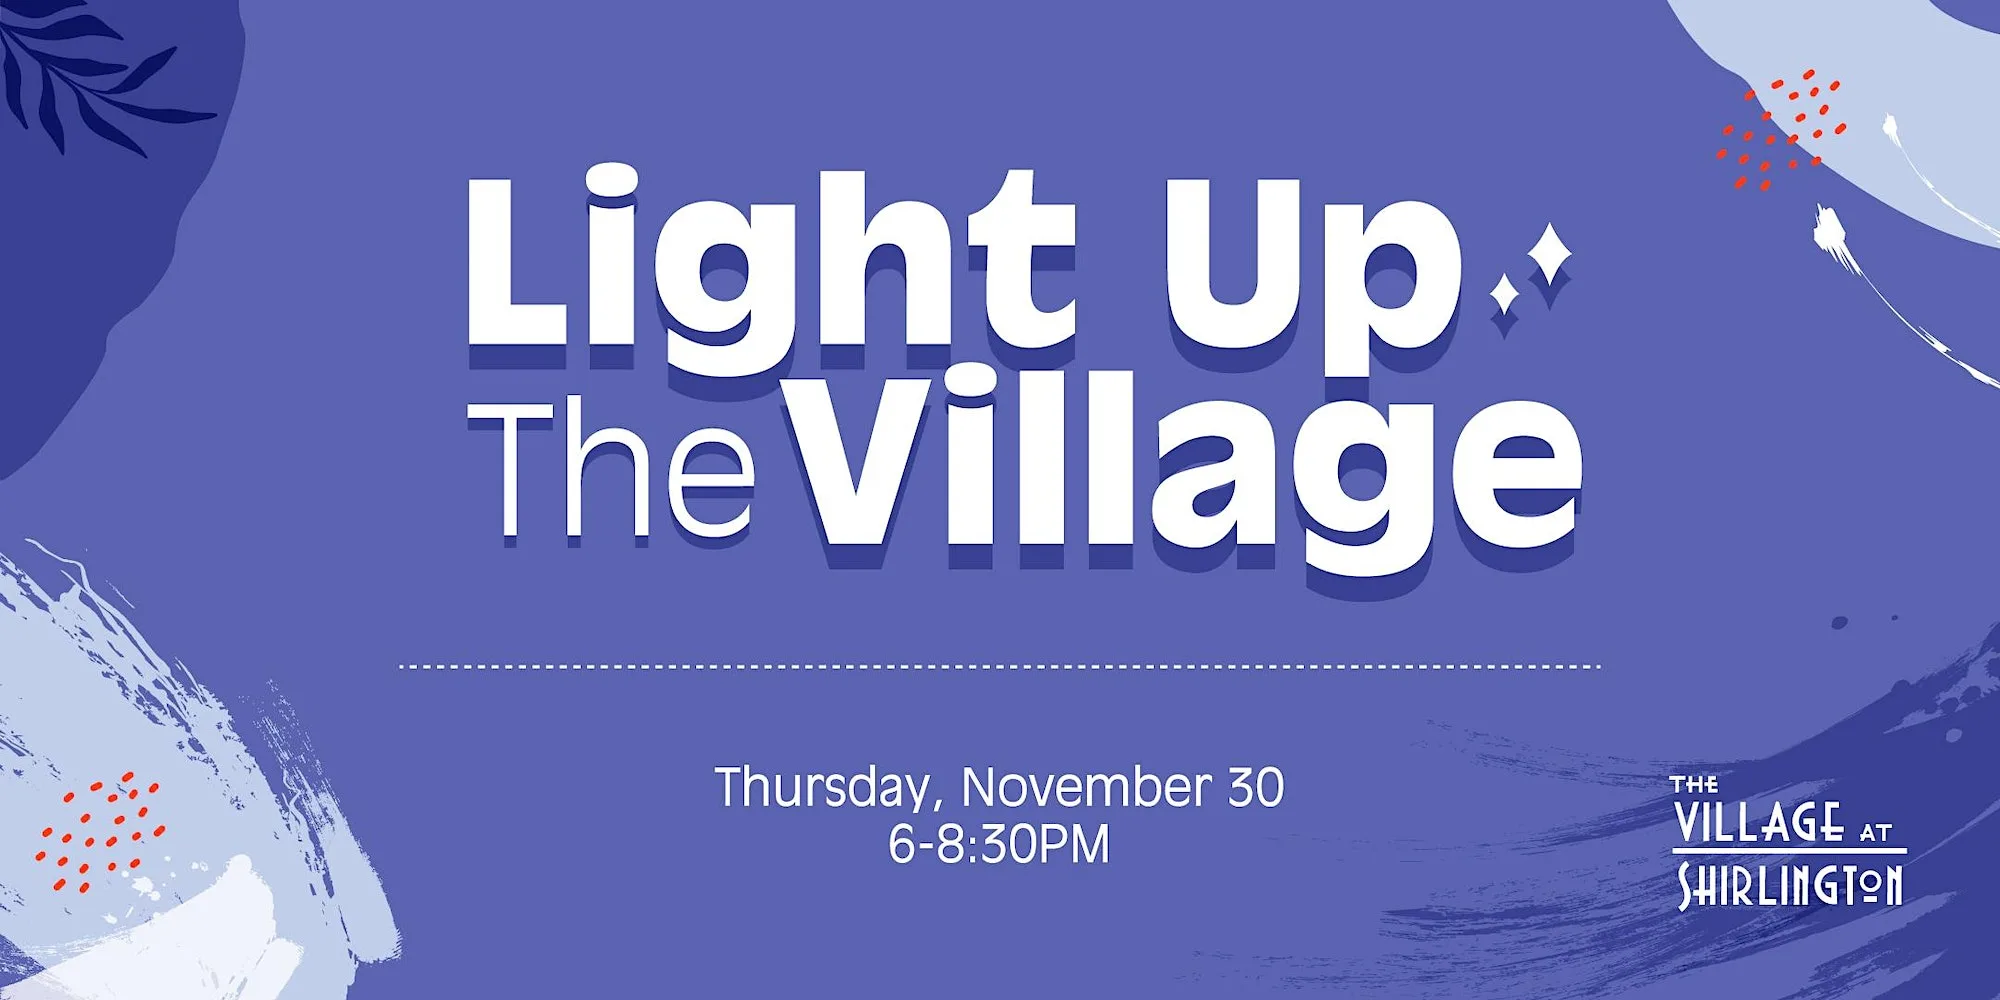 Light Up The Village - The Village at Shirlington